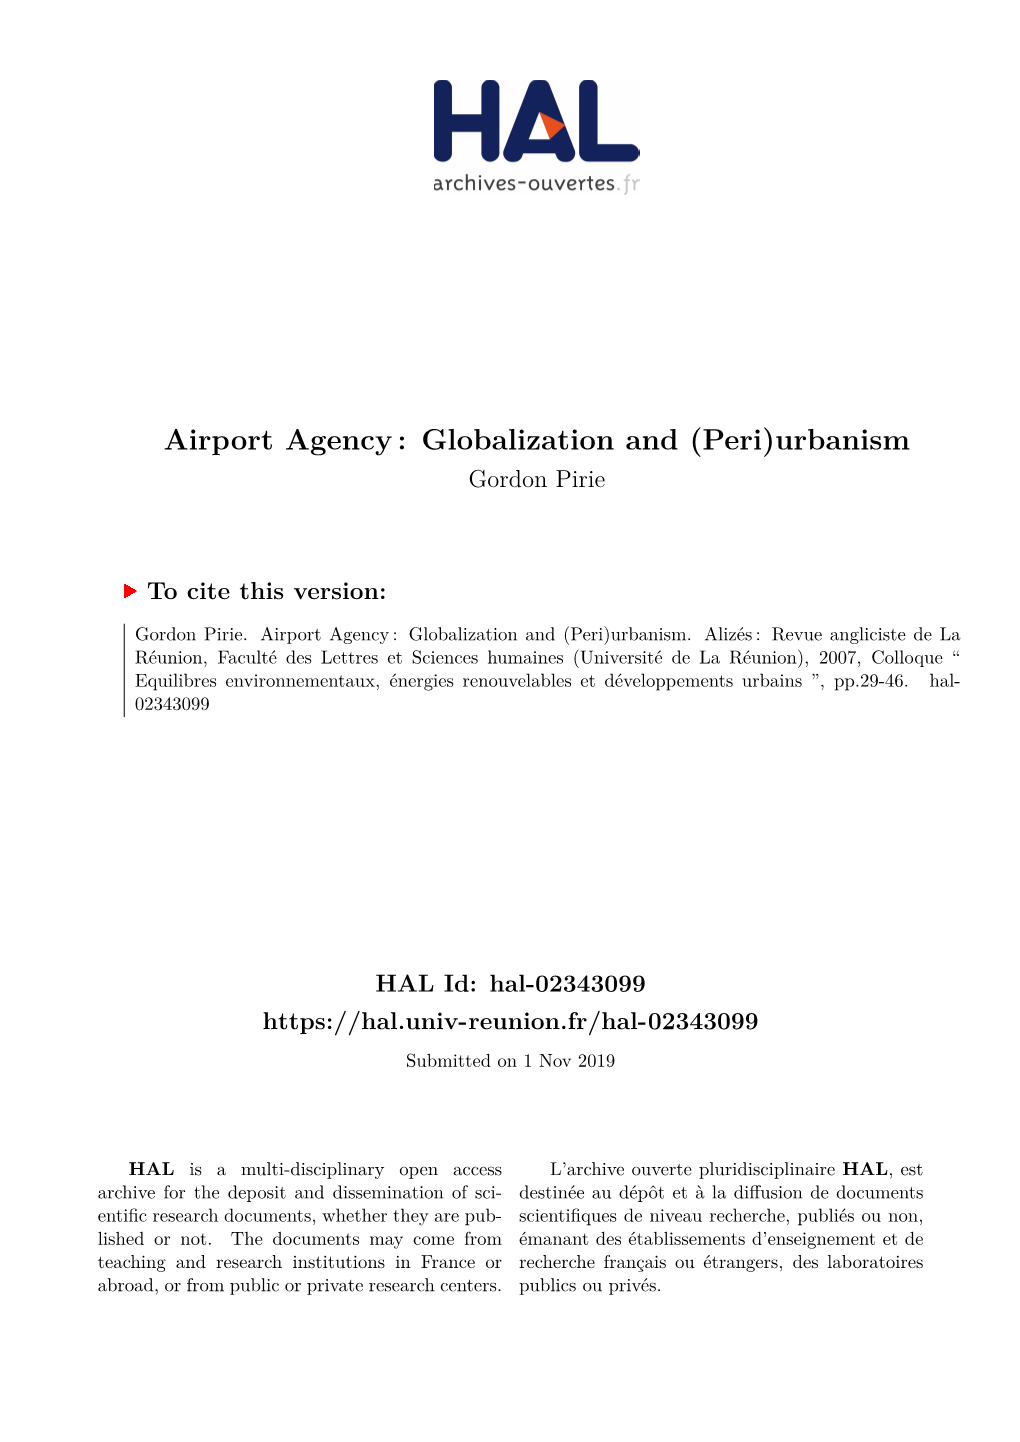 Airport Agency: Globalization and (Peri)Urbanism